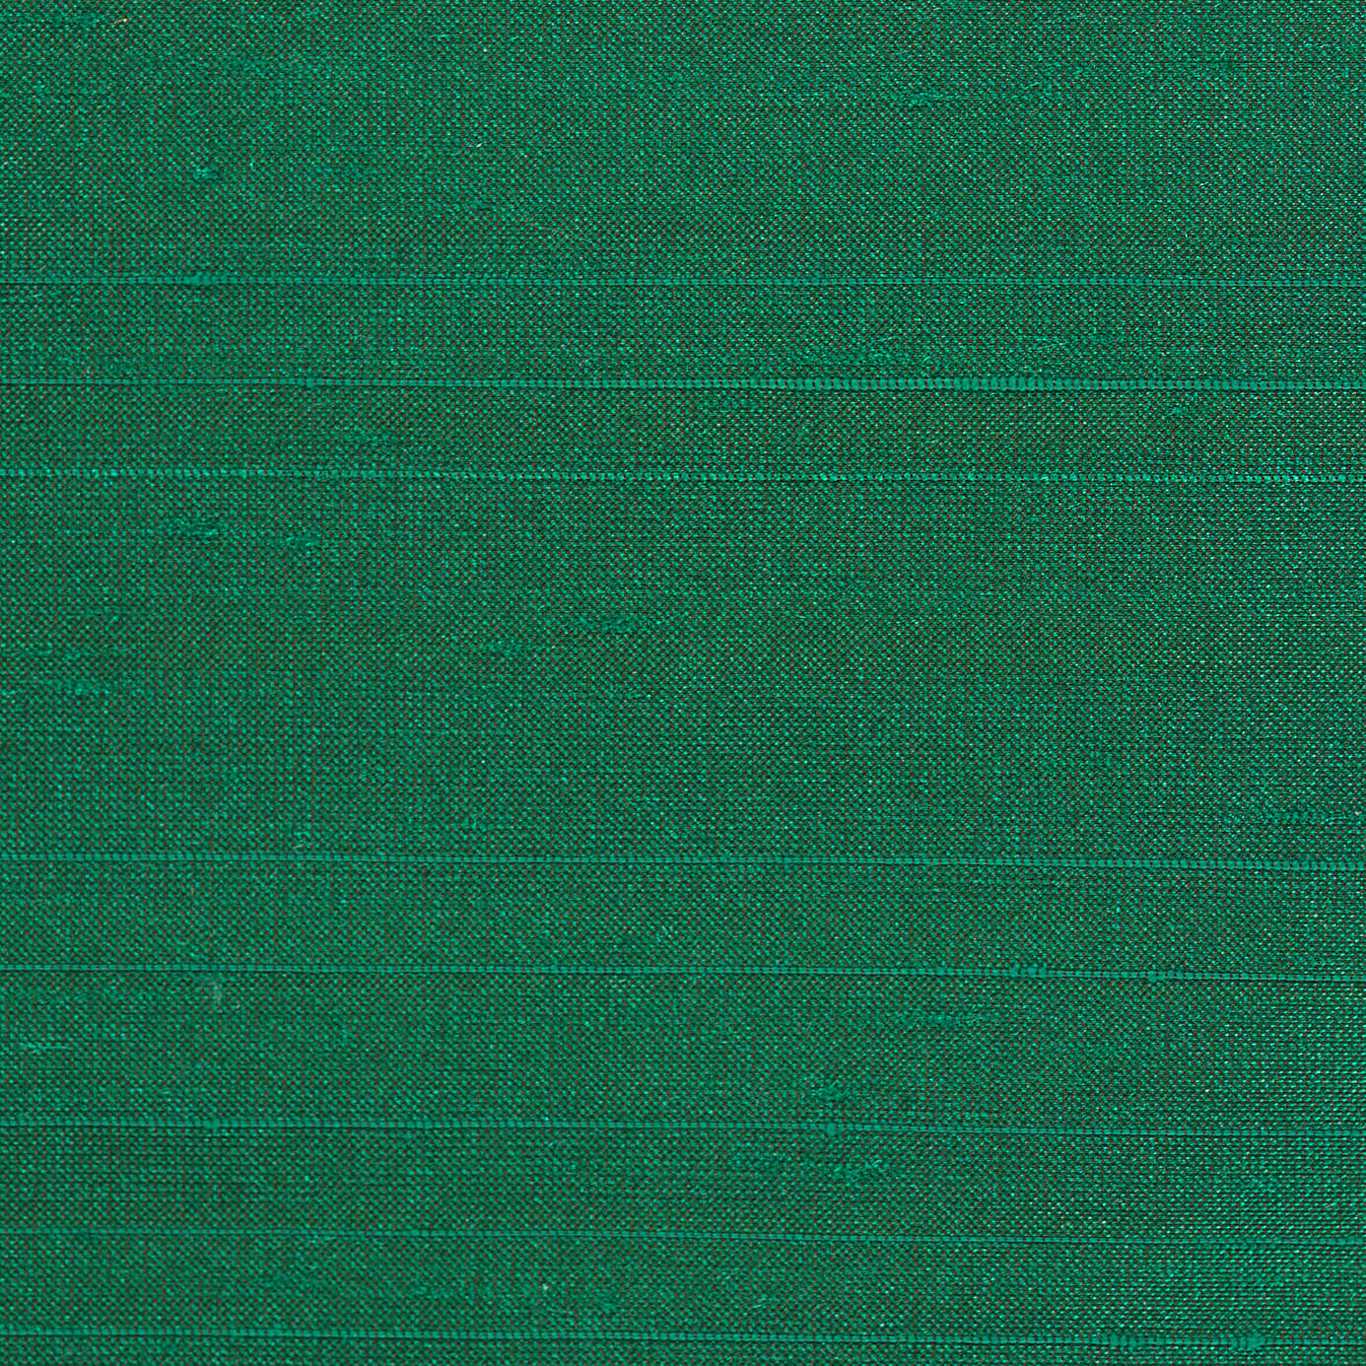 Deflect Fabric by Harlequin - HPOL440385 - Botttle Green